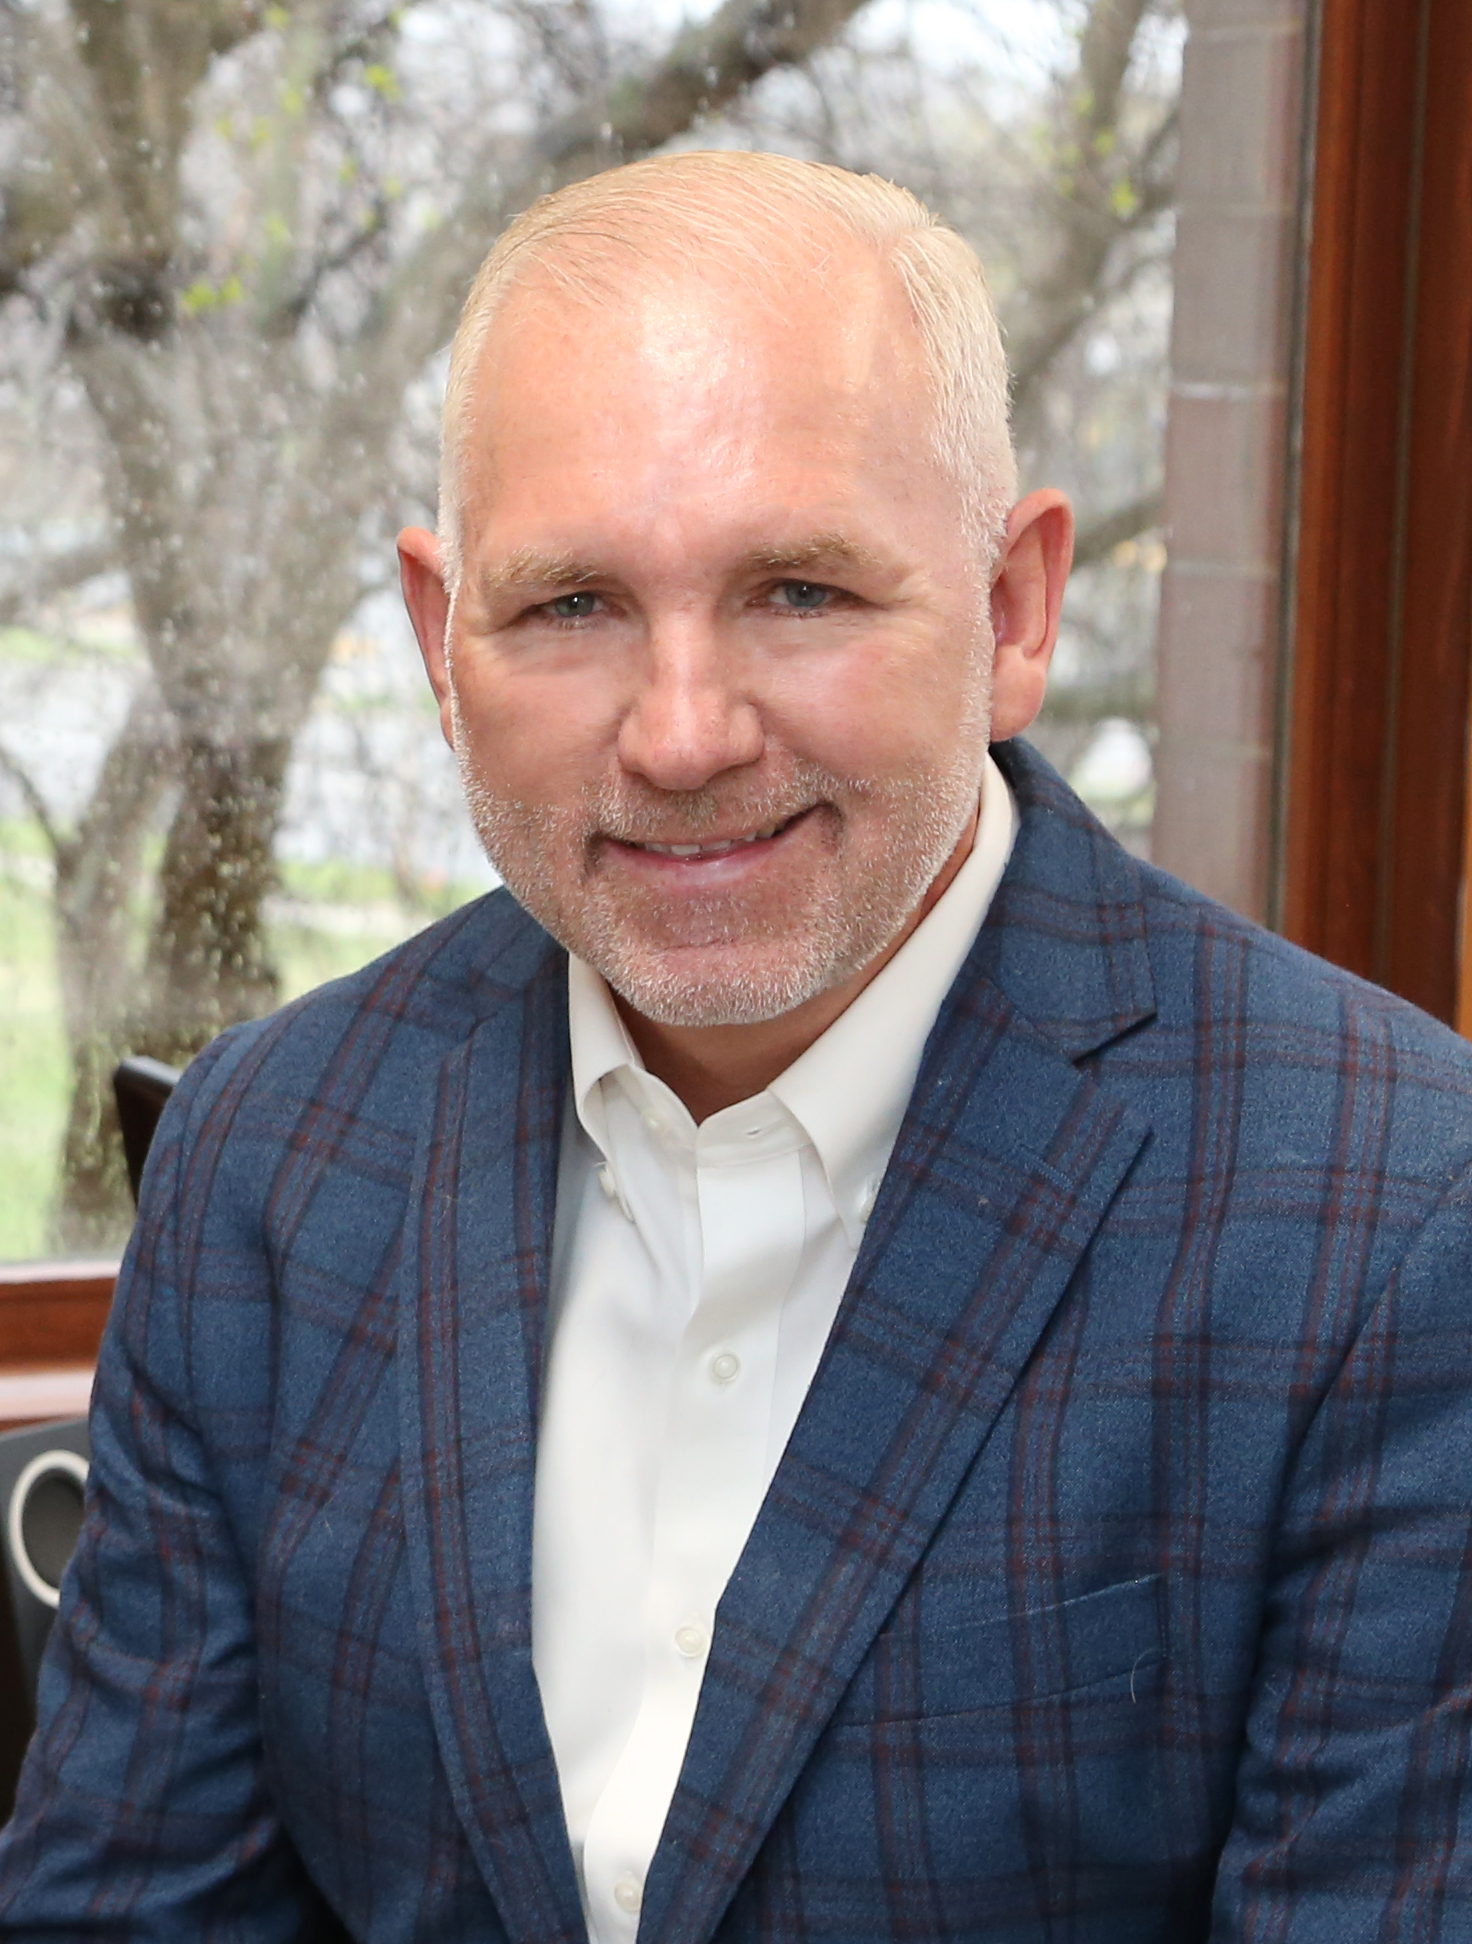 Brent Gregurek - COO, Executive VP, Partner